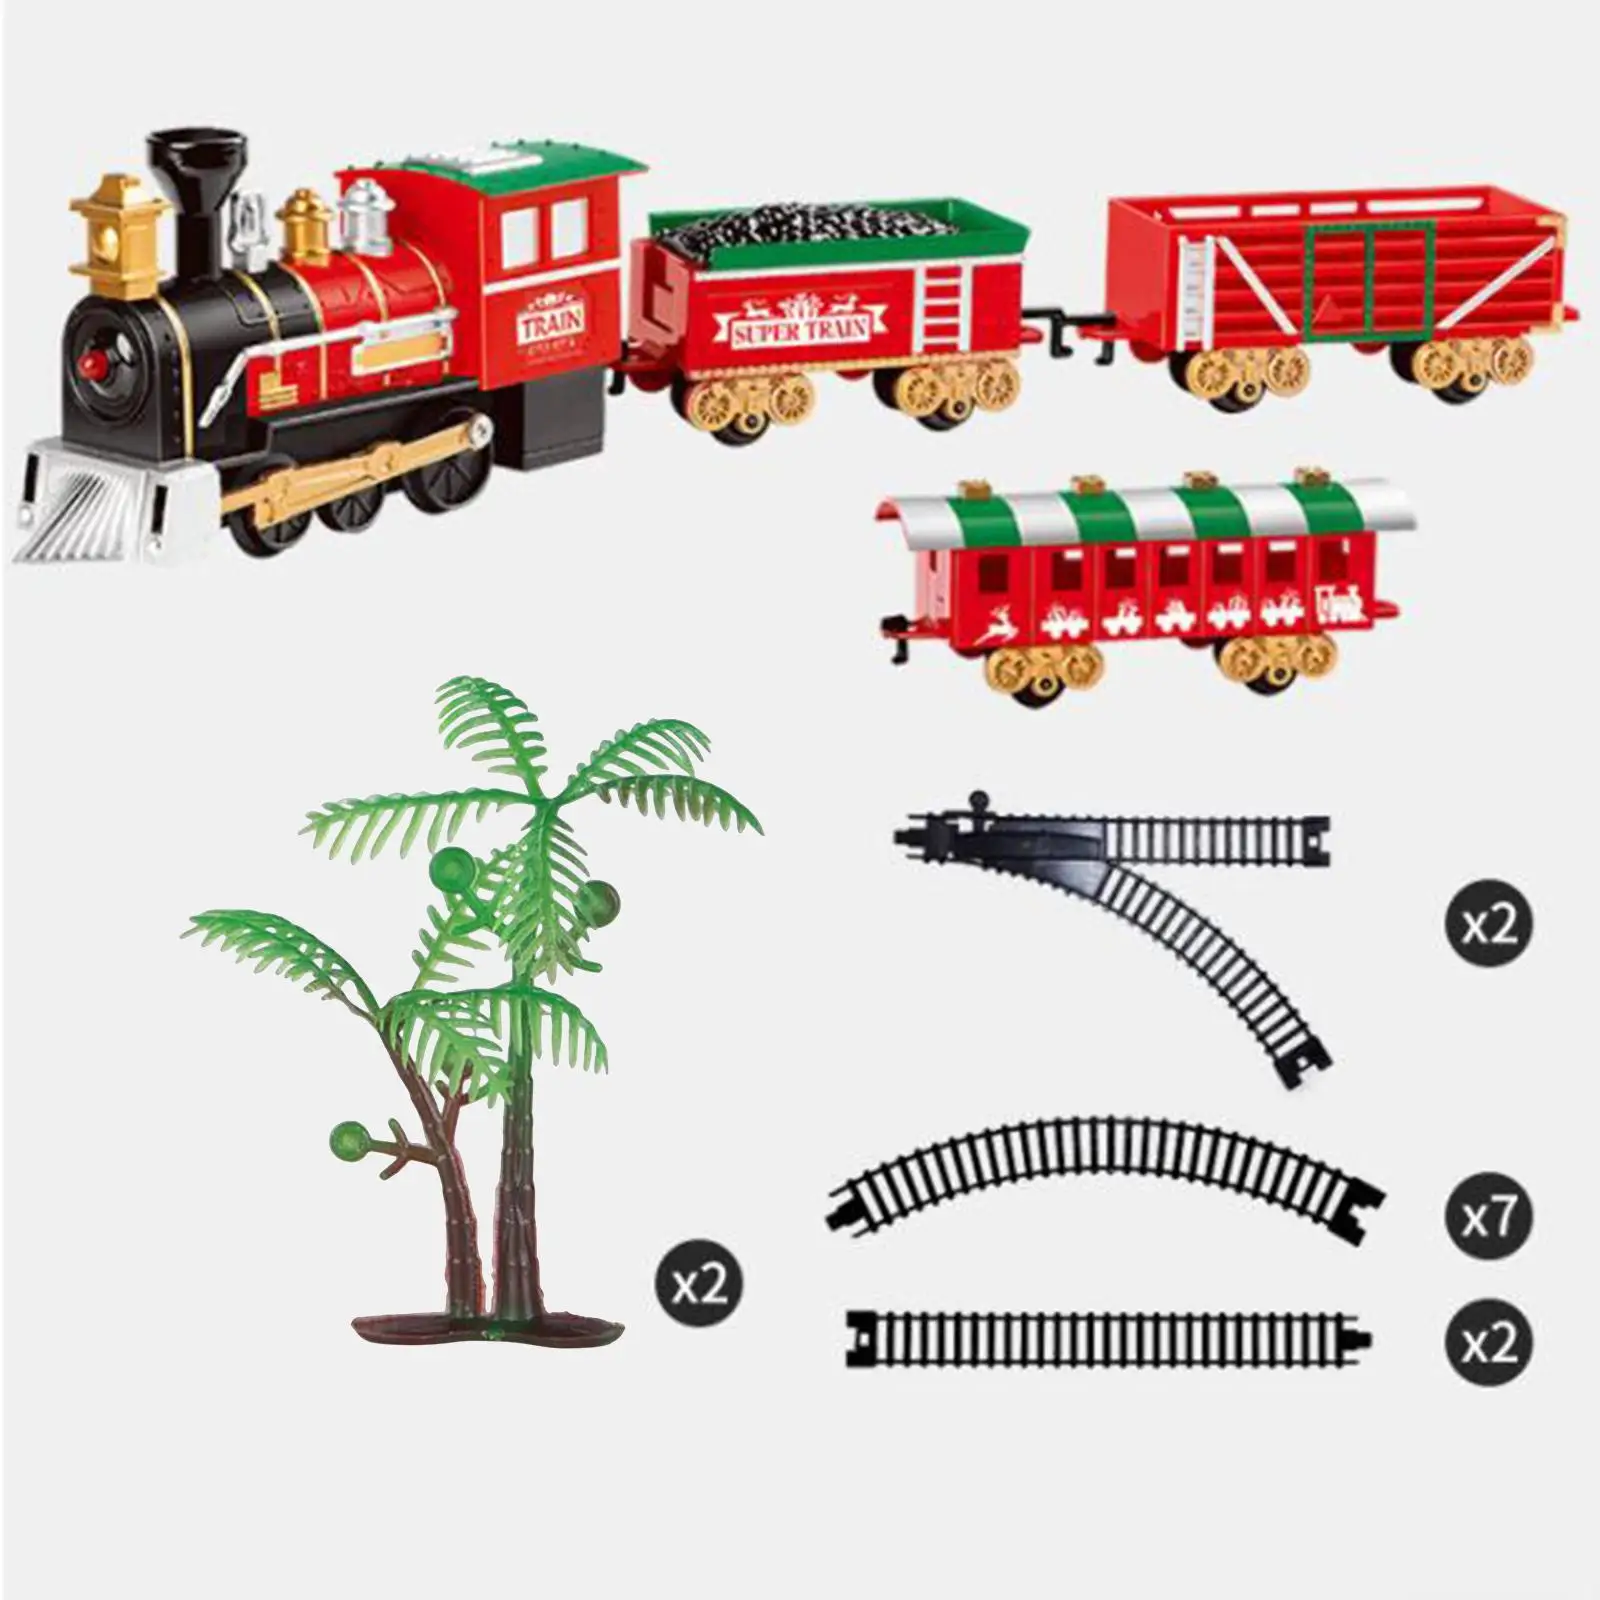 Portable Christmas Train Set Railway Kit Early Leaning Education Toy Railway Track Set for Girls Boys Kids Toddler Children